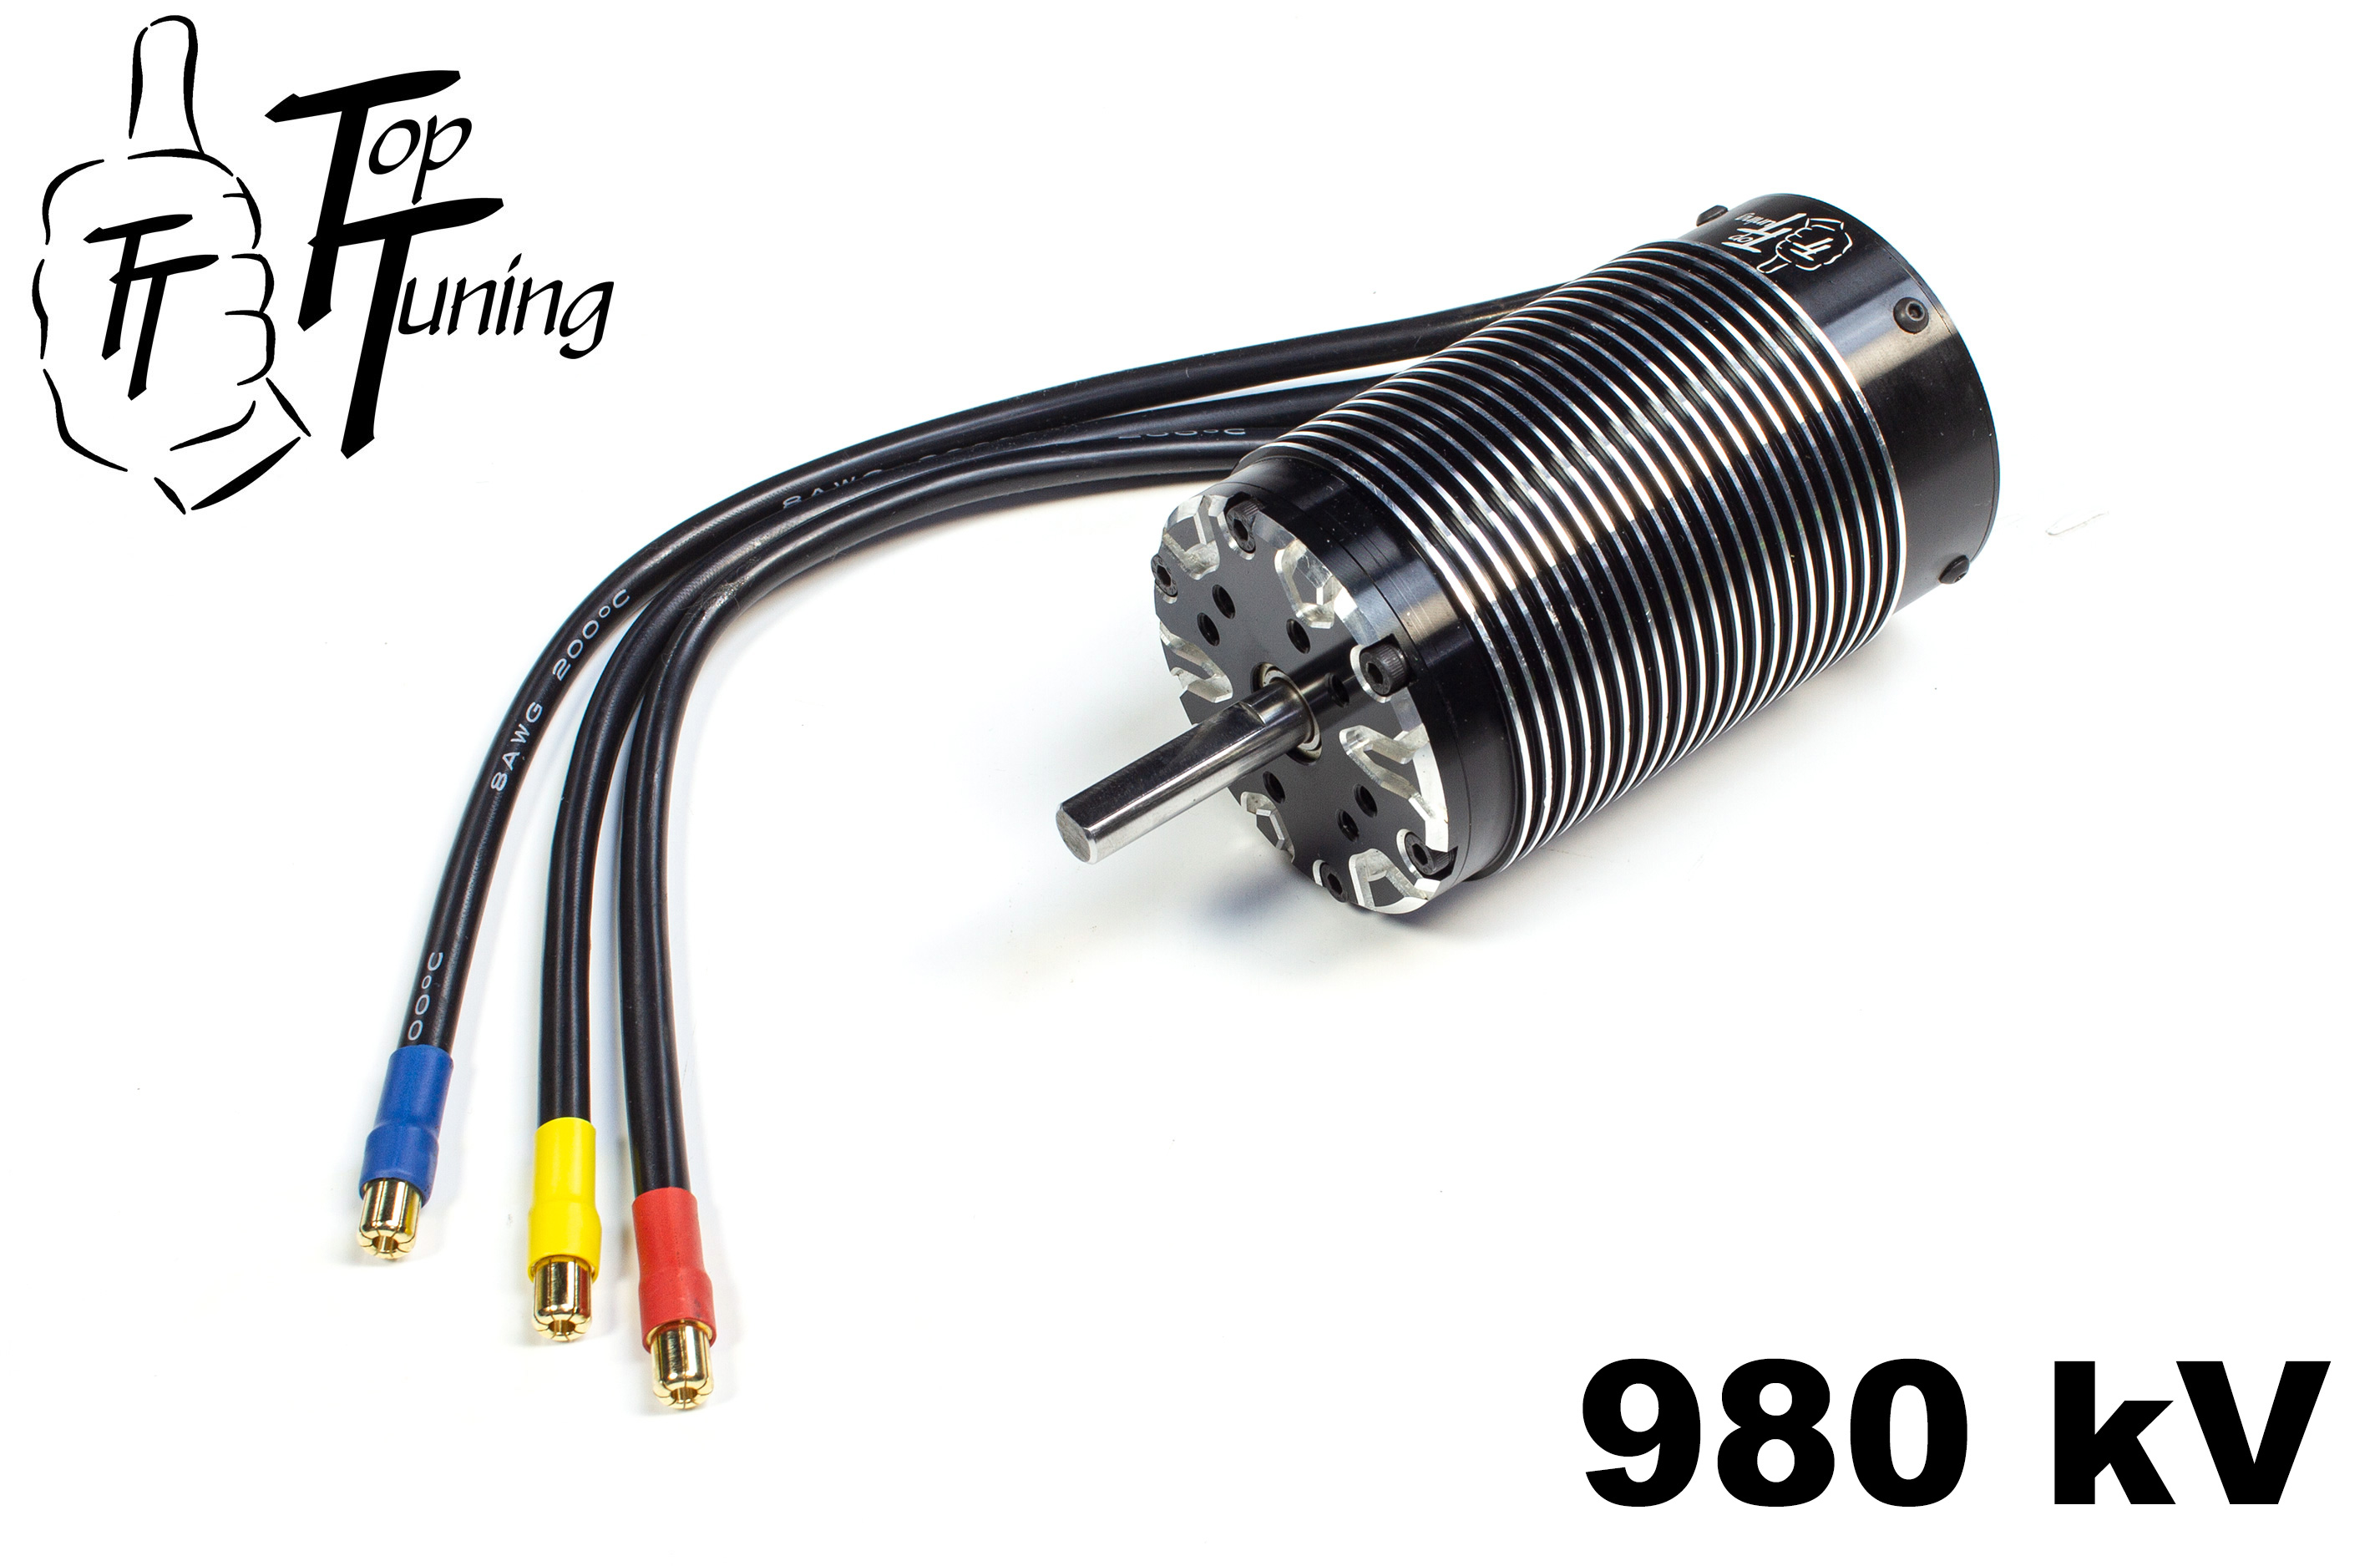 TT5692/980 Top Tuning Brushless Motor 980 kV